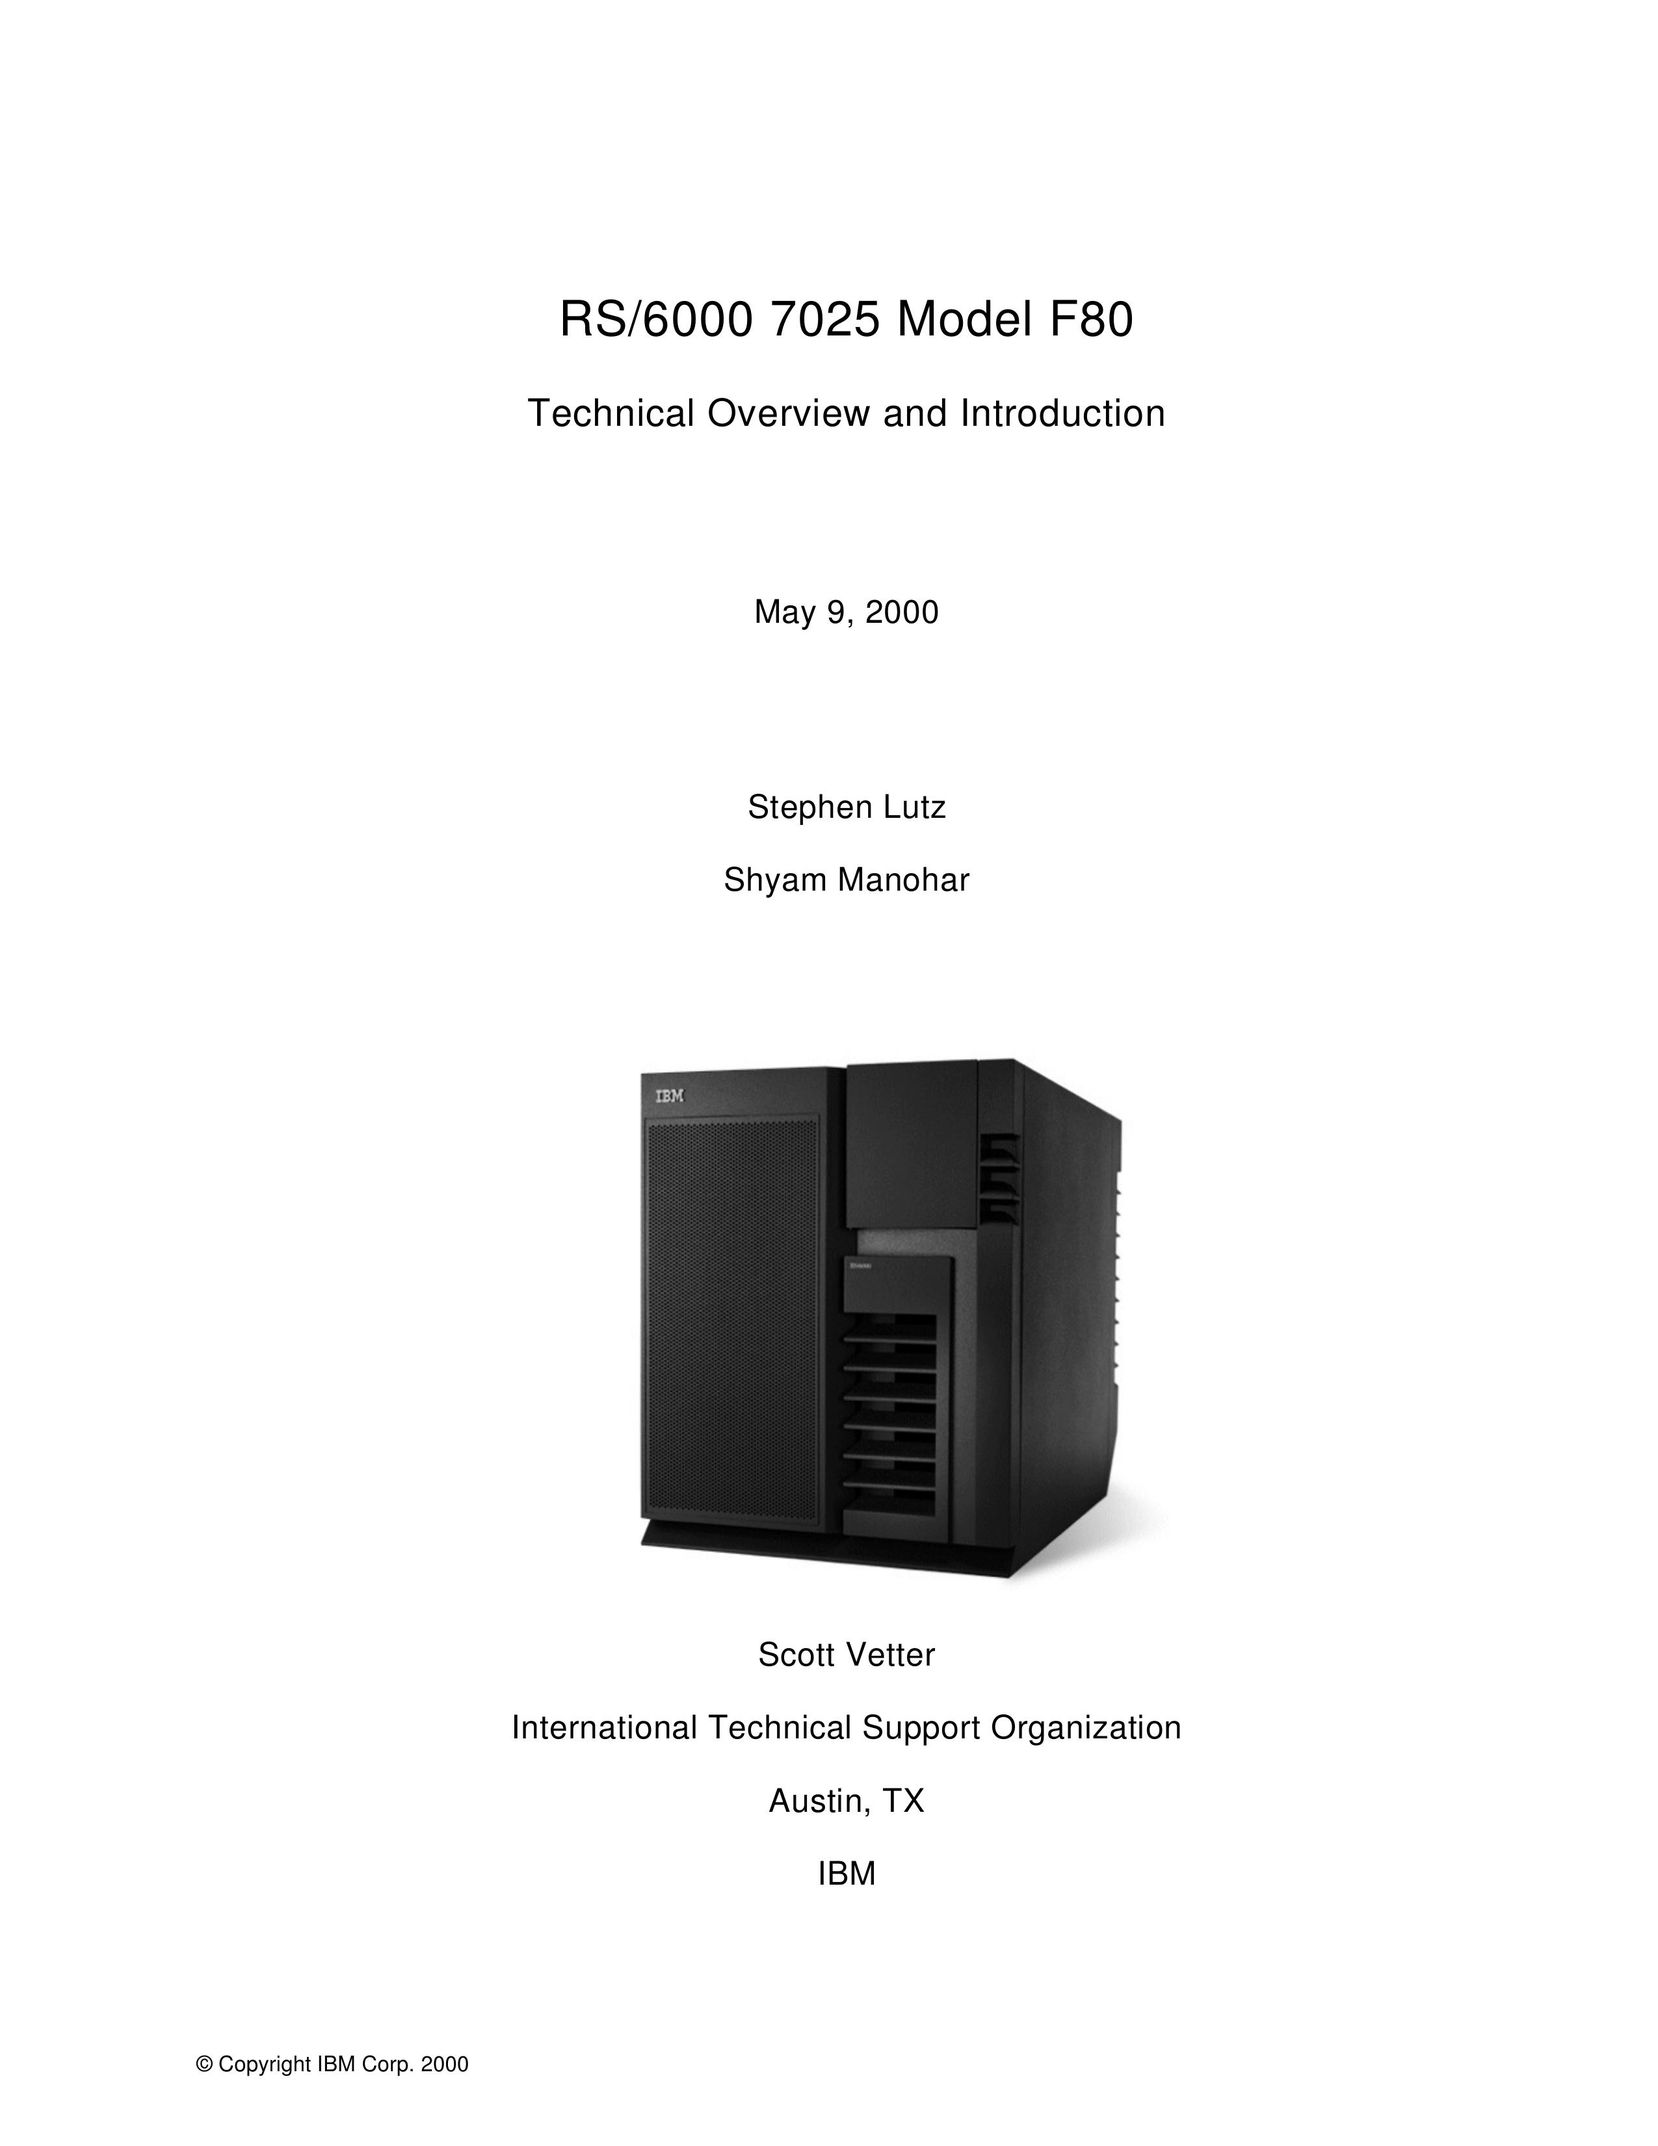 IBM F80 Server User Manual